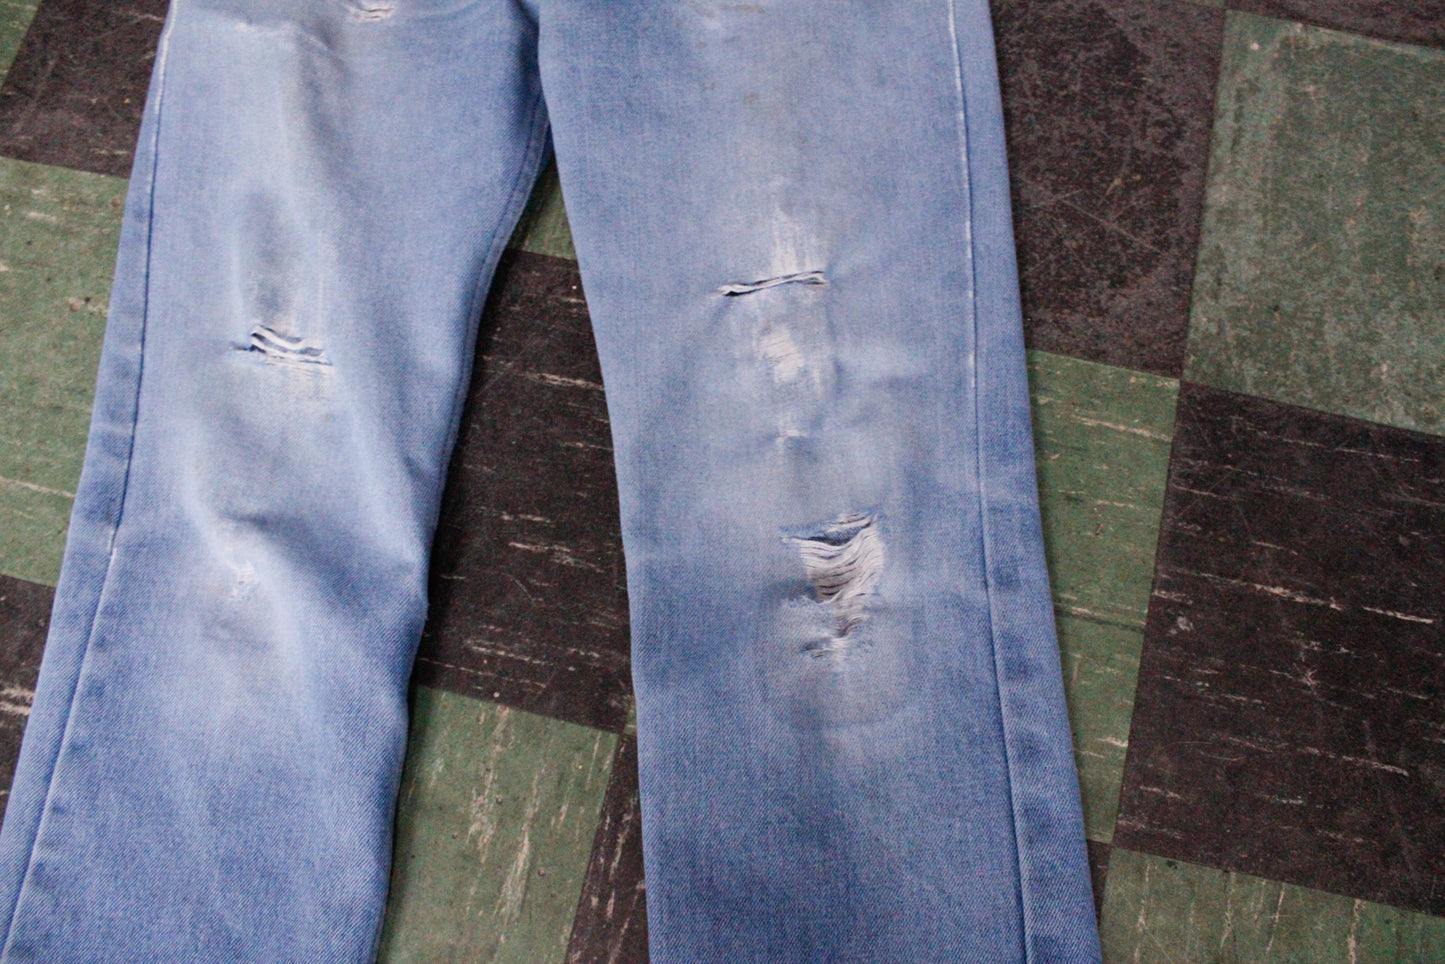 1990s Orange Tab Levis Light Denim Jeans - 30" Waist